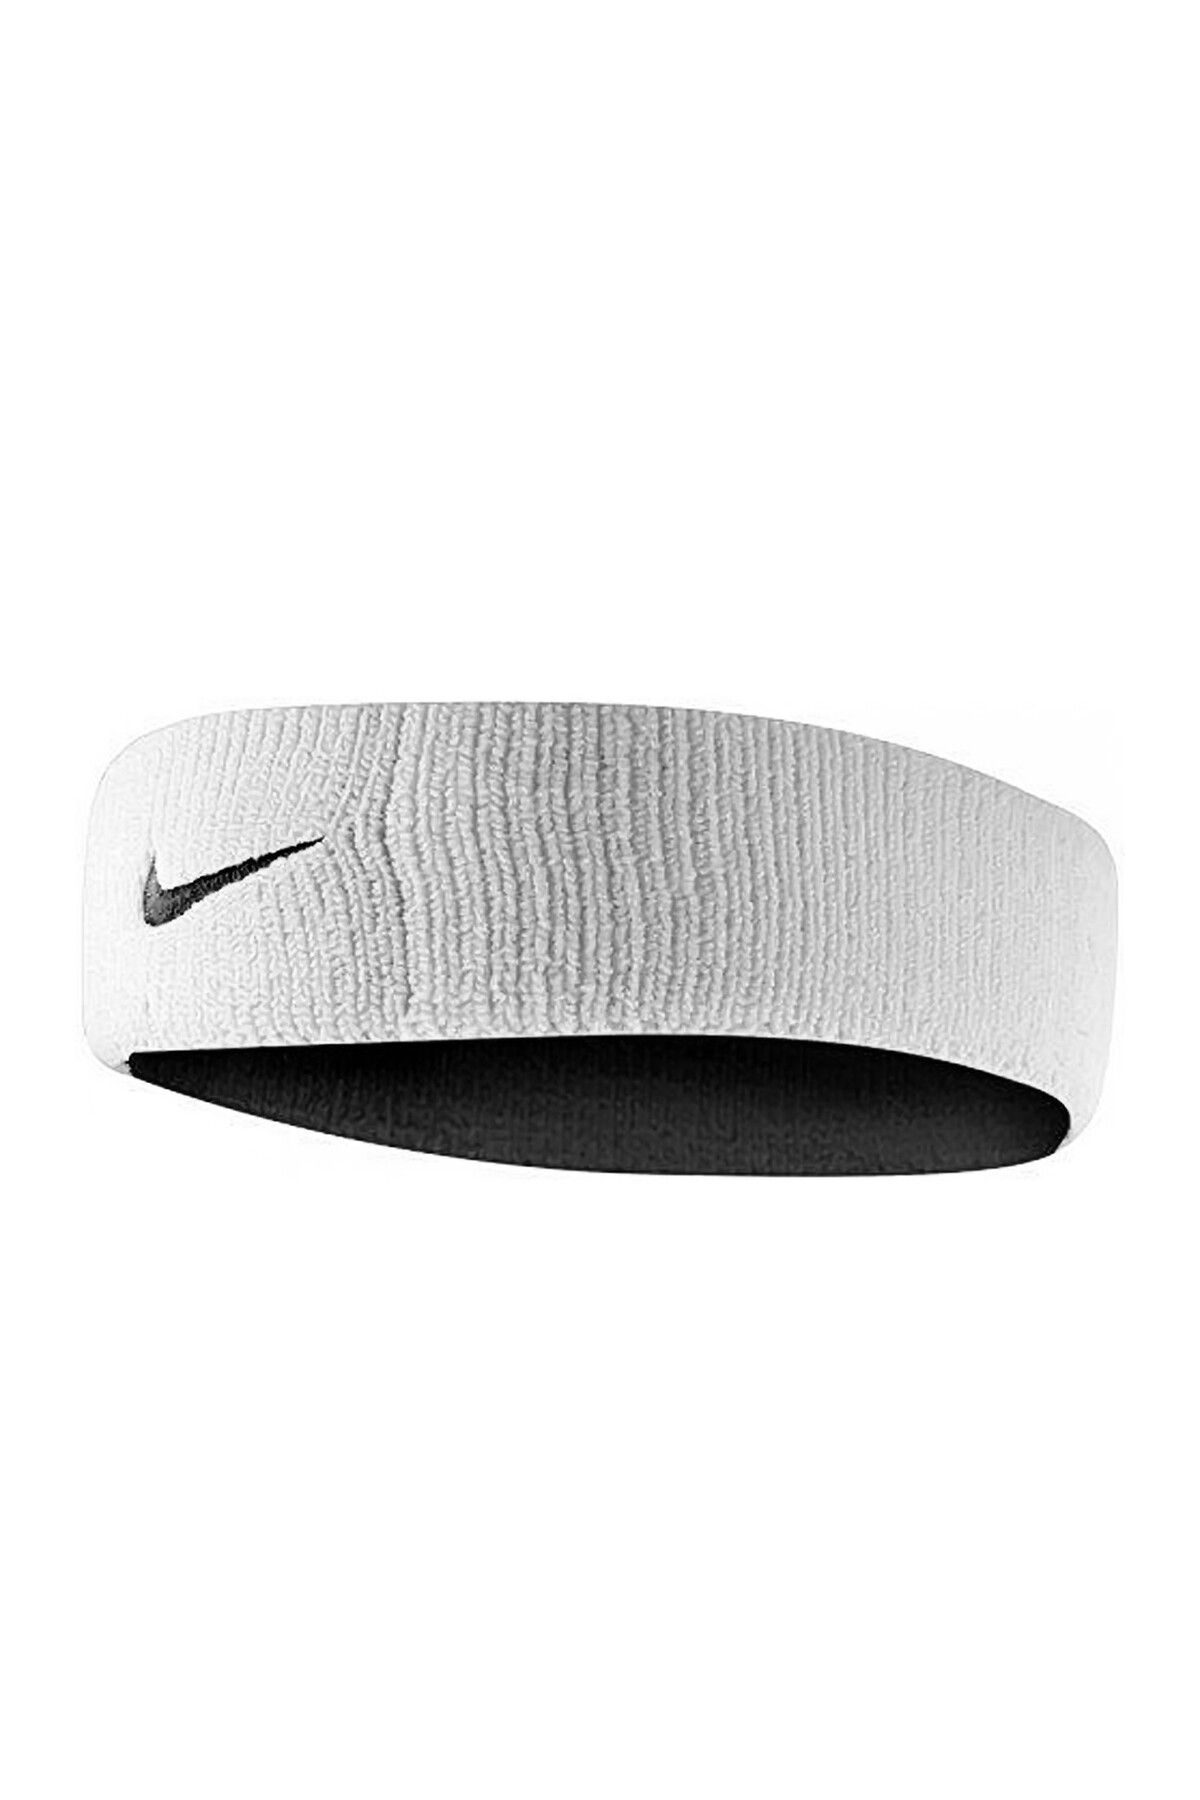 Nike Dri-fit Headband Home & Away White/black Osfm, One Size/3